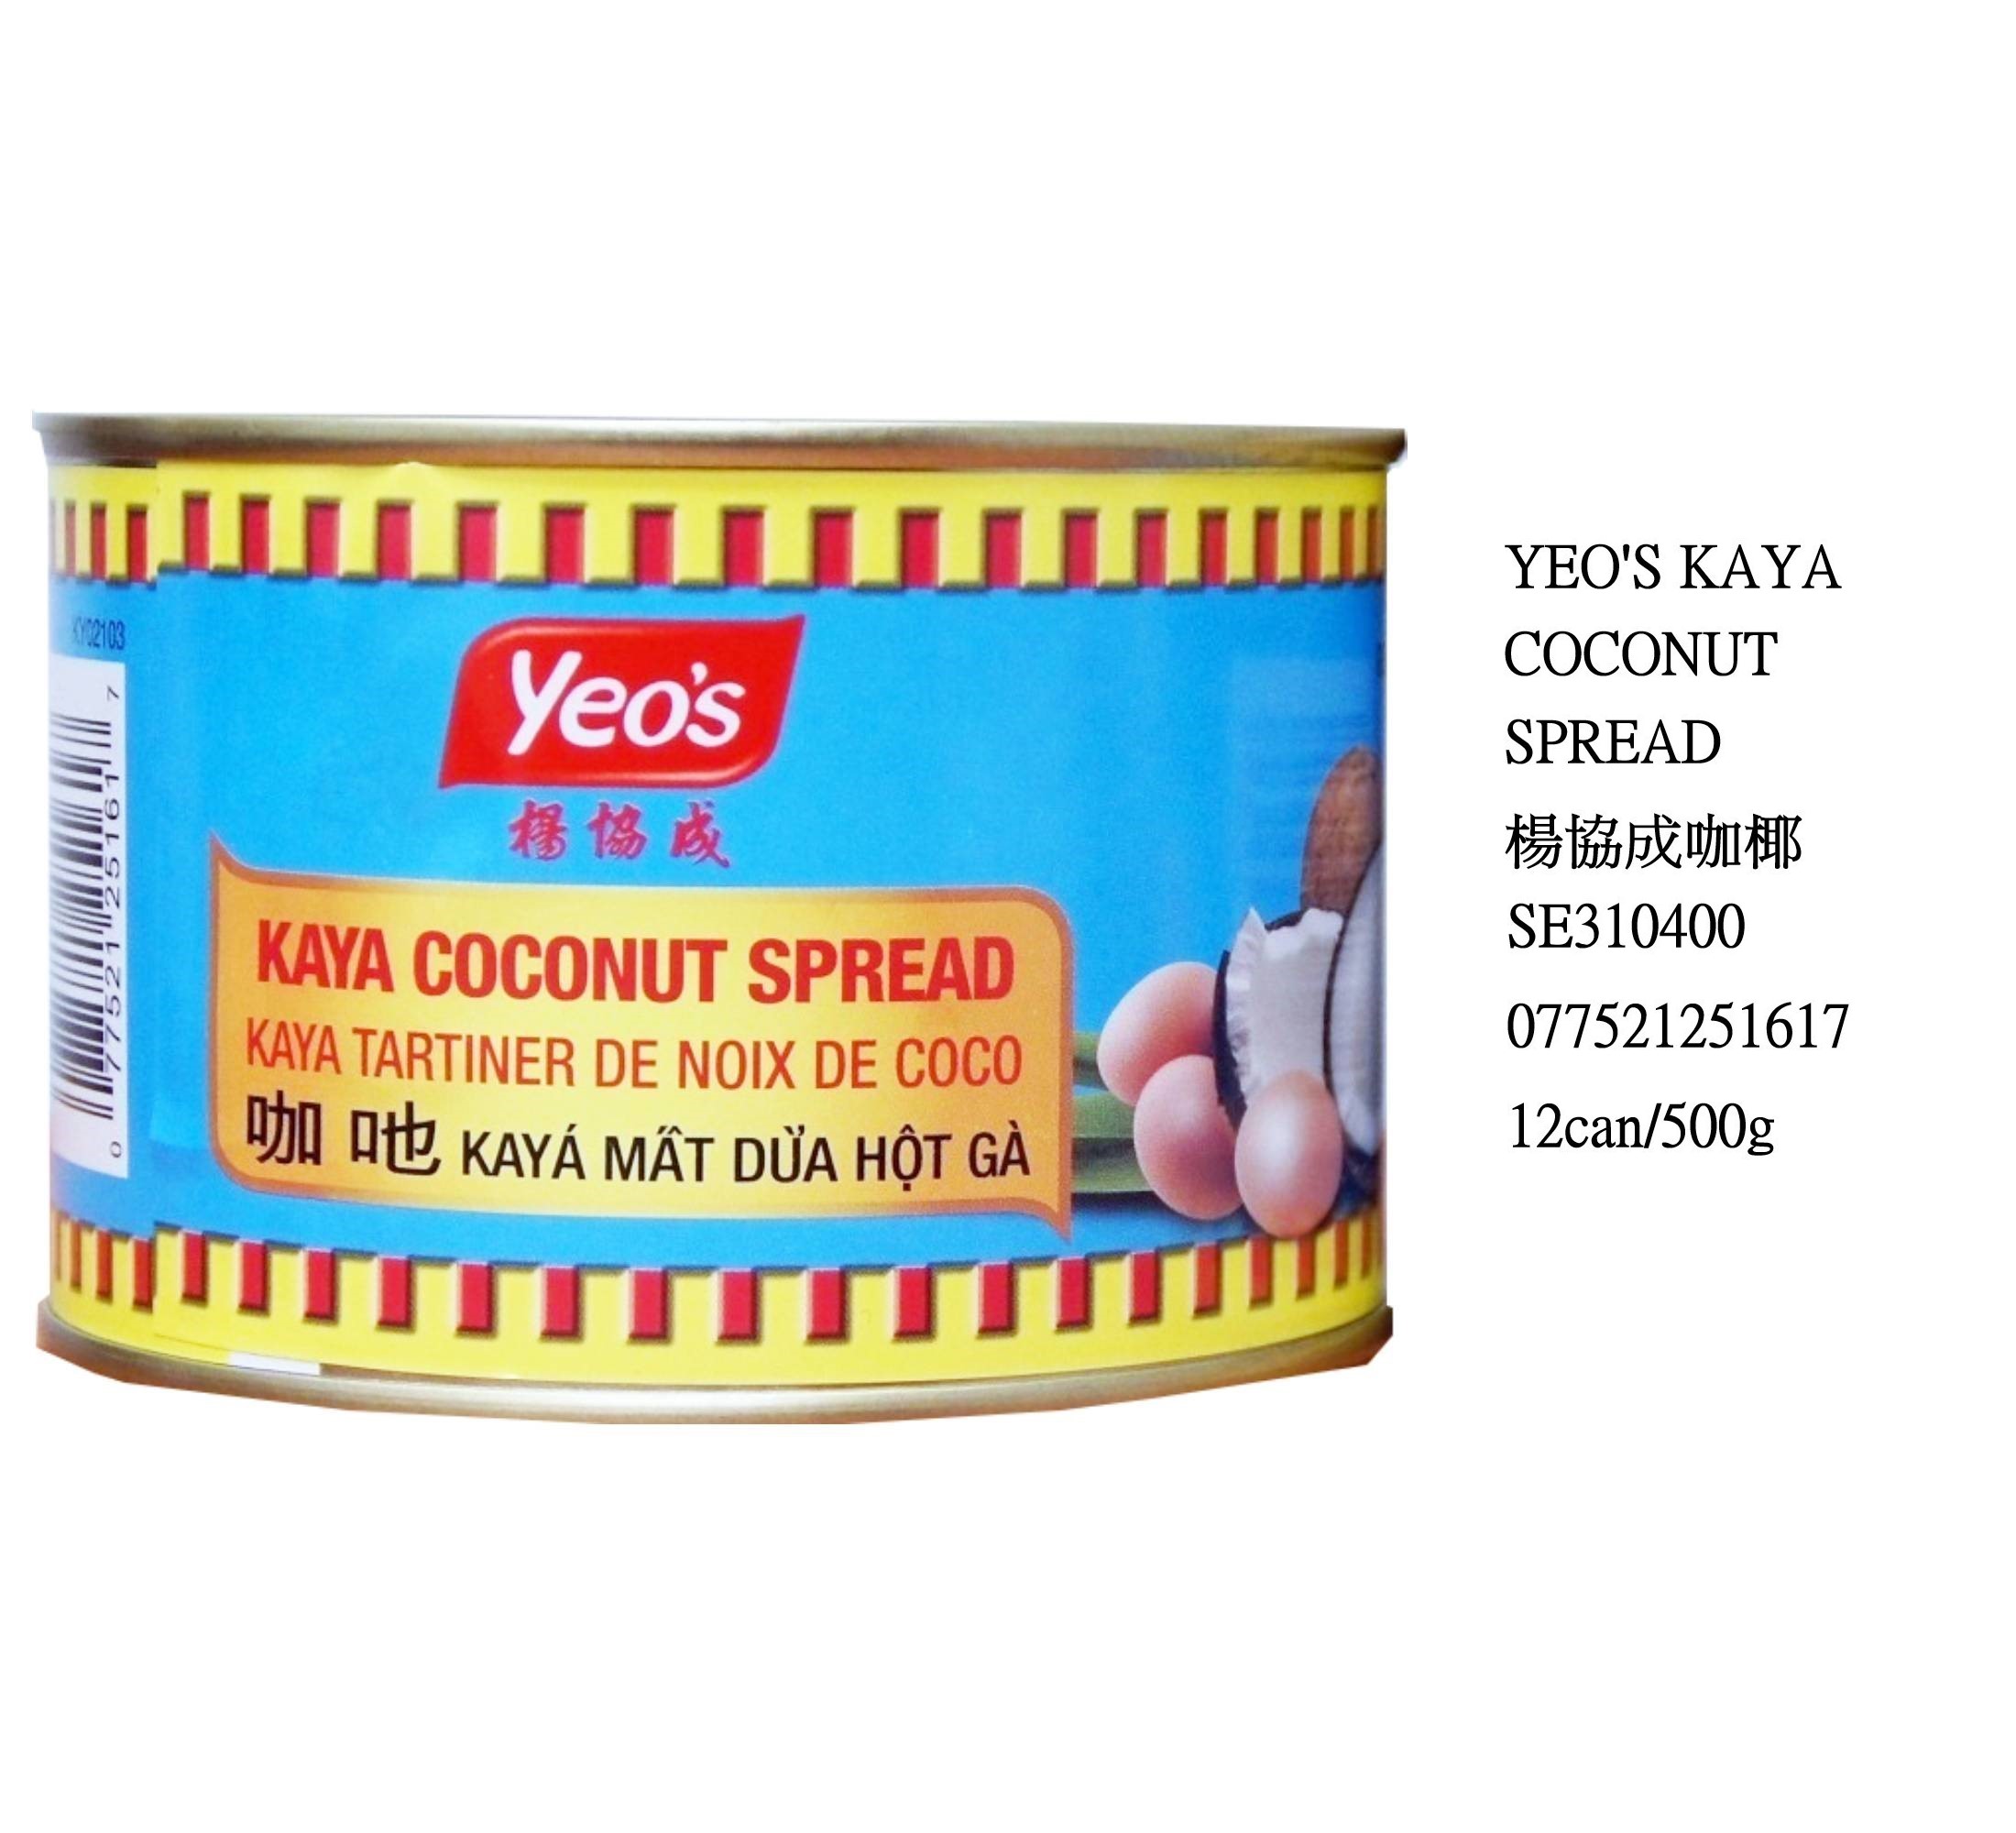 YEO'S KAYA COCNUT SPREAD SE310400